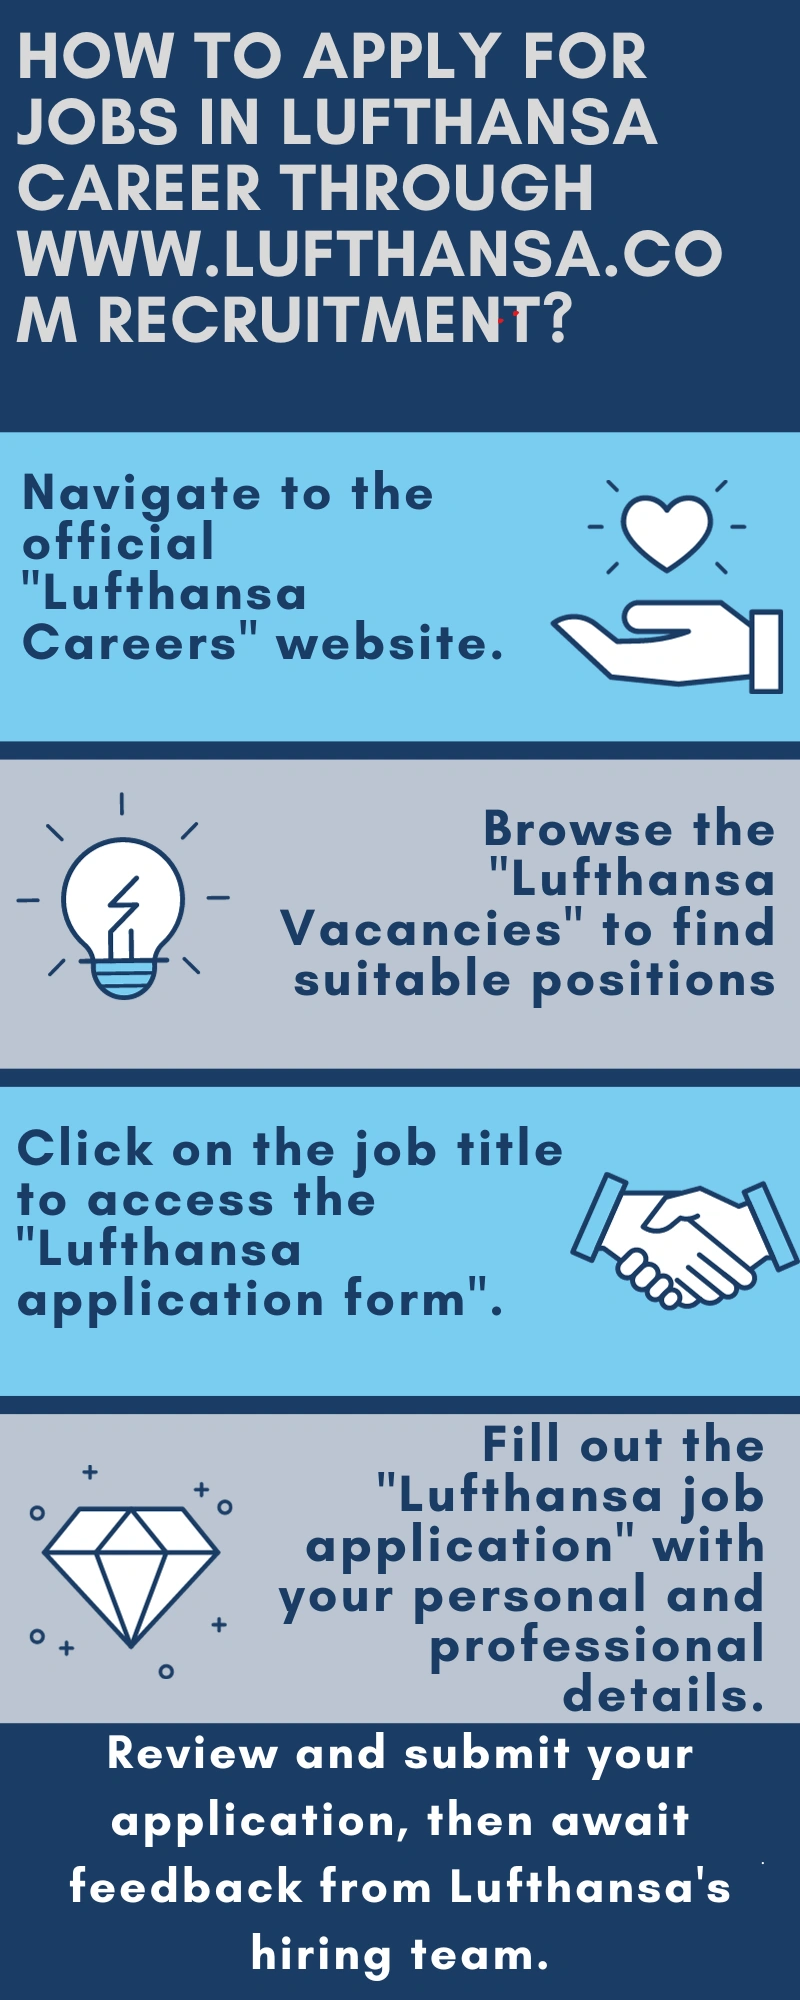 How to Apply for Jobs in Lufthansa Career through www.lufthansa.com recruitment?